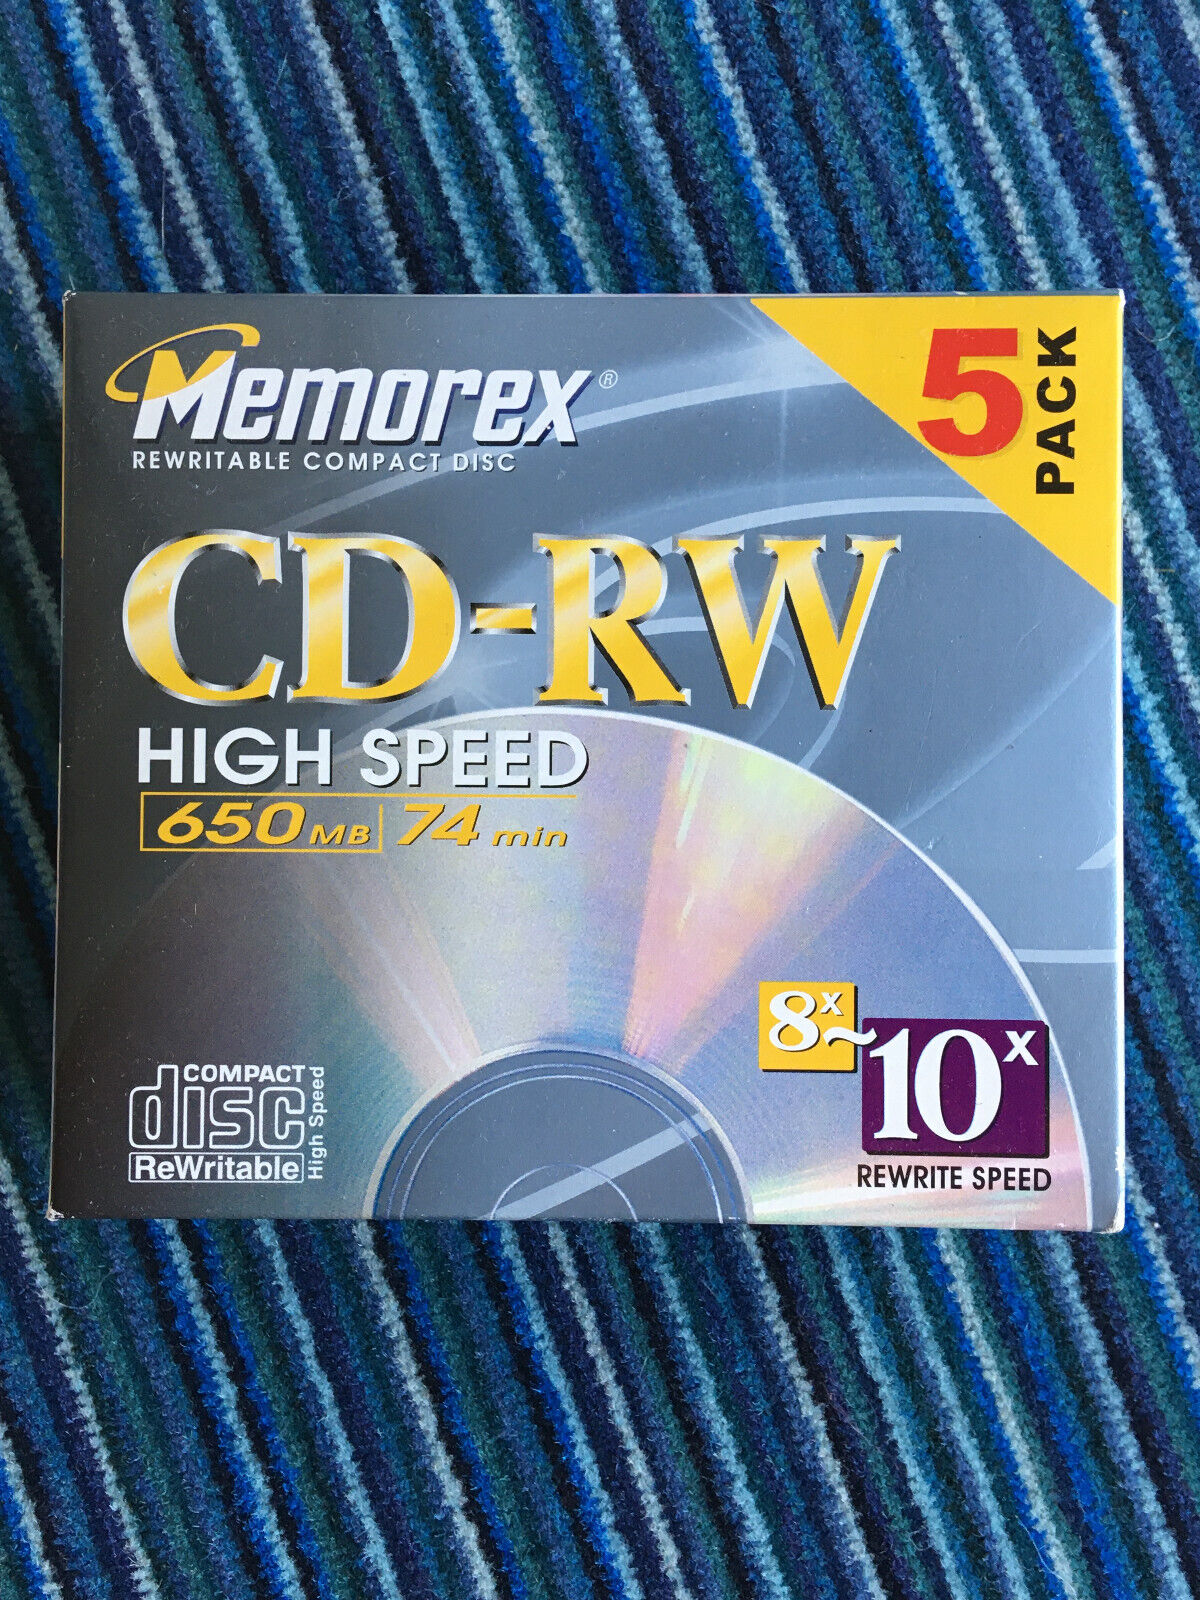 Memorex High Speed CD-RW 5 Pack Rewritable 650MB 74min NOS Sealed Retro Y2K